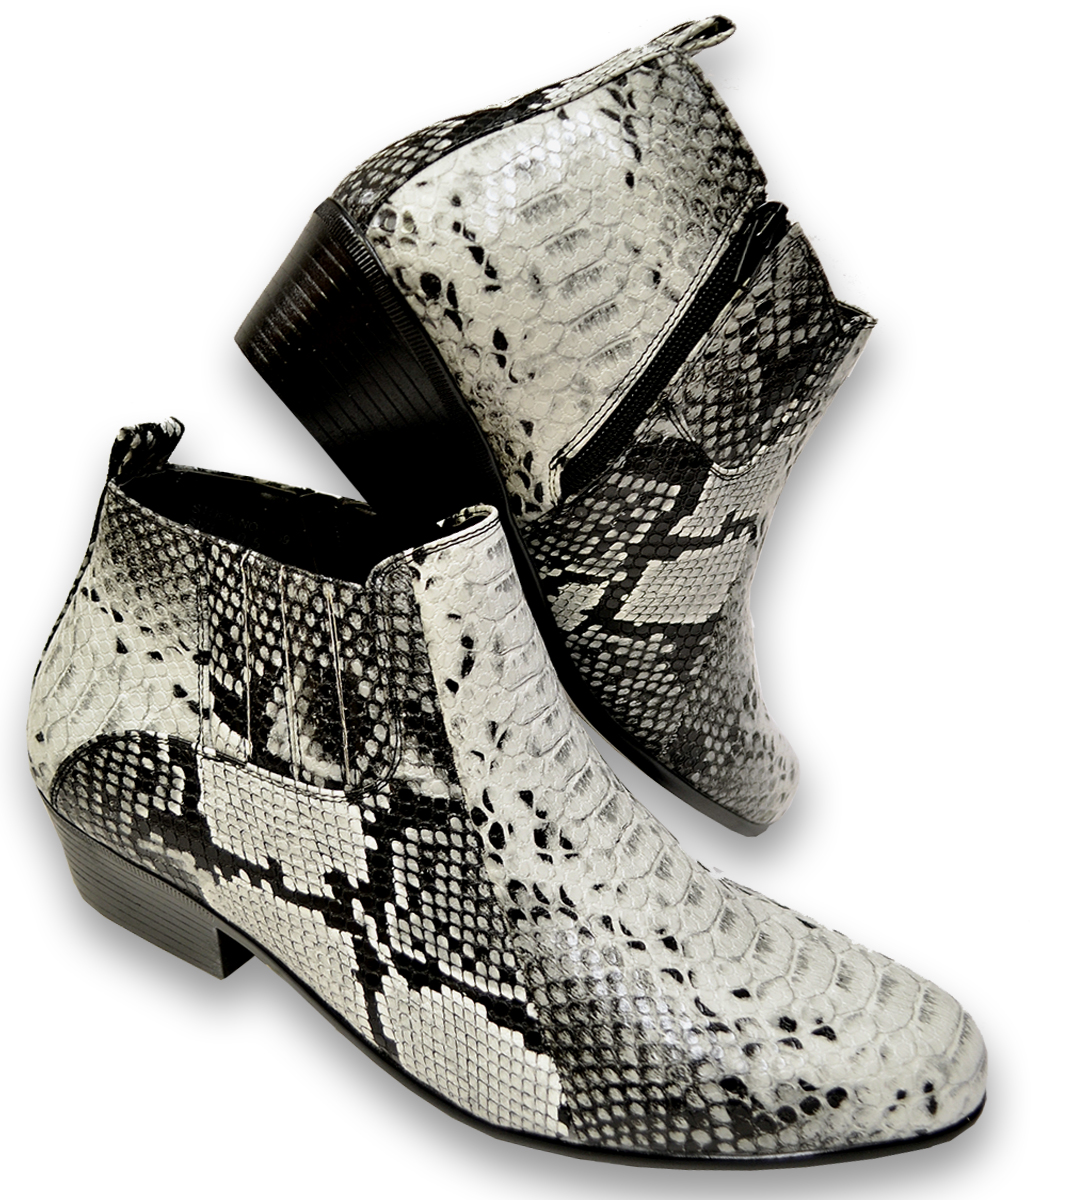 Mens Taupe Distressed Vintage Style Wingtip Dress Shoes Antonio Cerrelli 6533 11